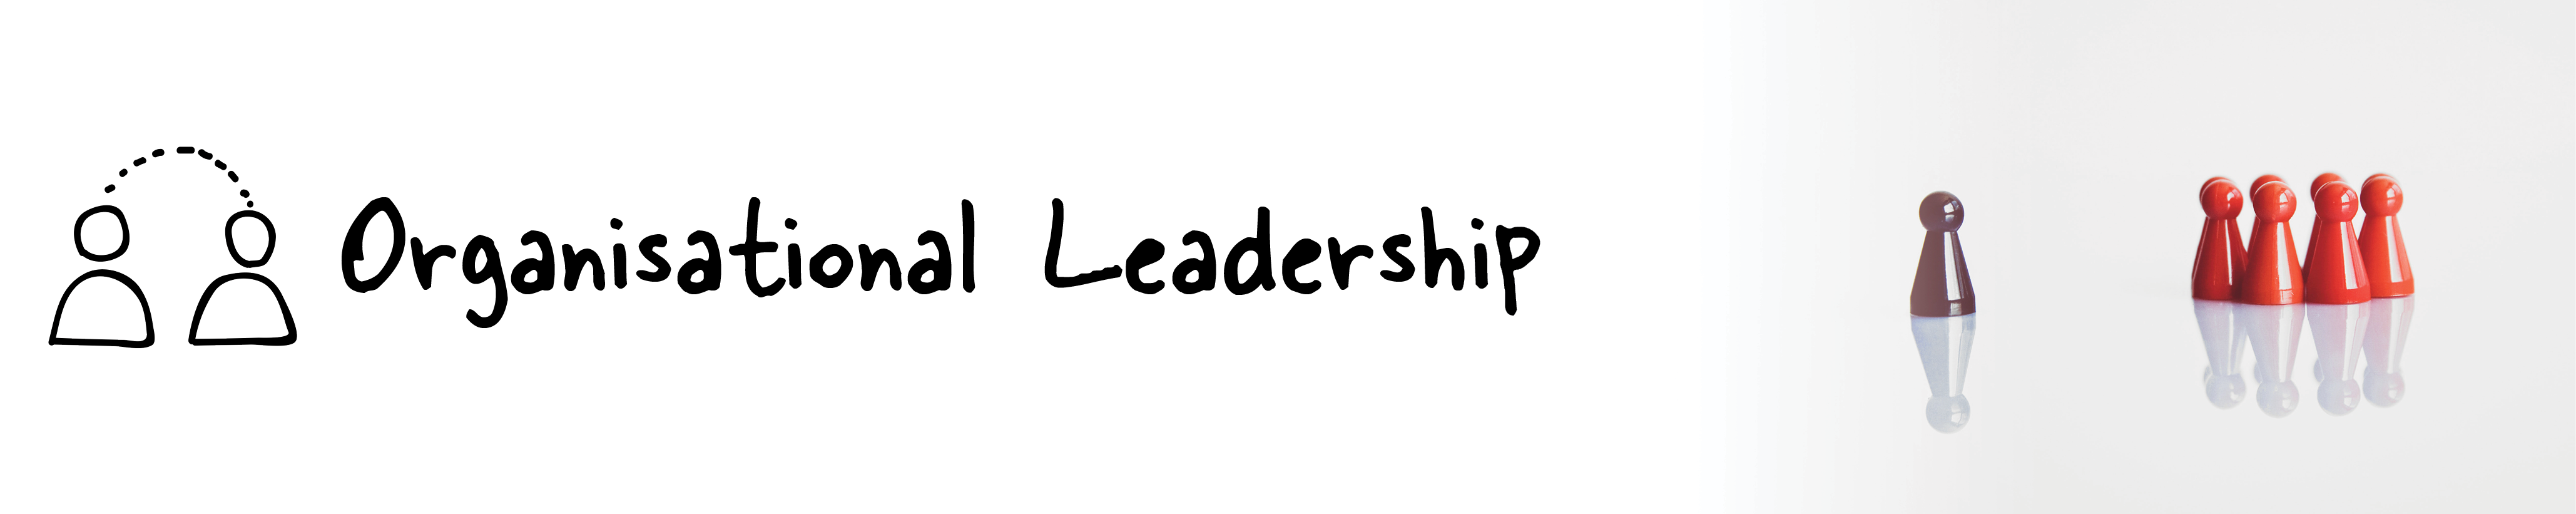 Organisational Leadership